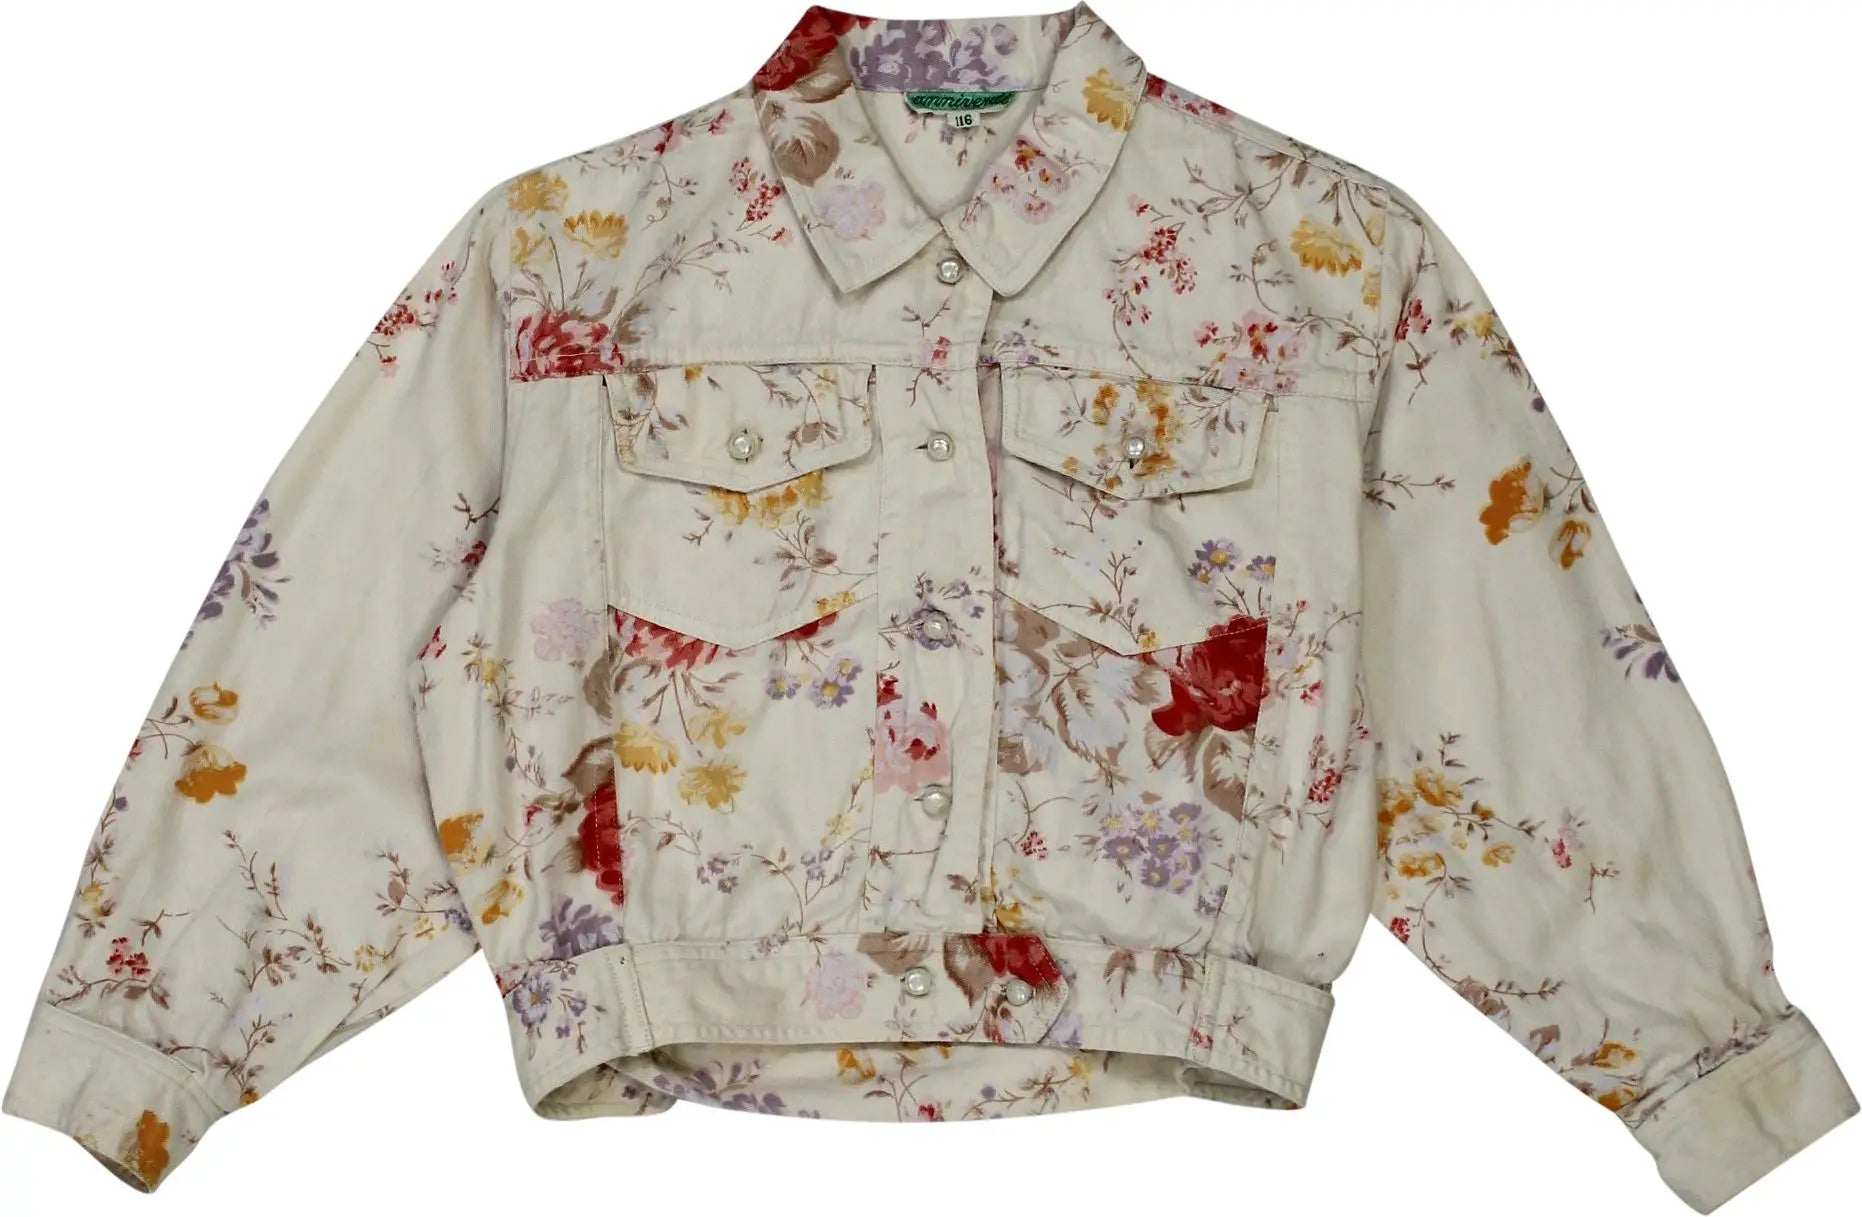 Anniverdi - Floral Denim Jacket- ThriftTale.com - Vintage and second handclothing